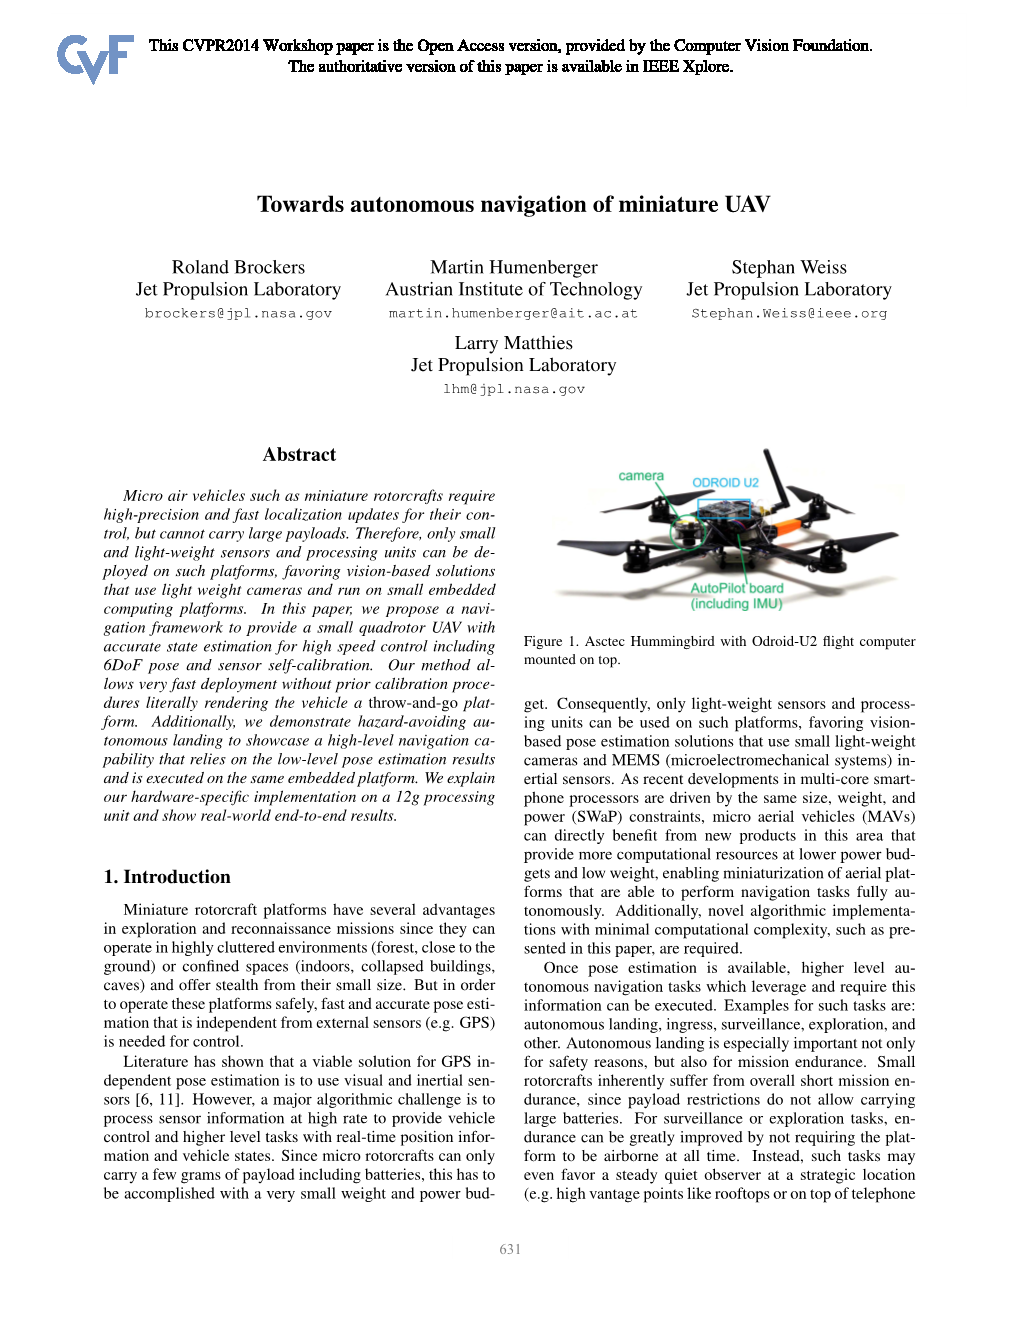 Towards Autonomous Navigation of Miniature UAV